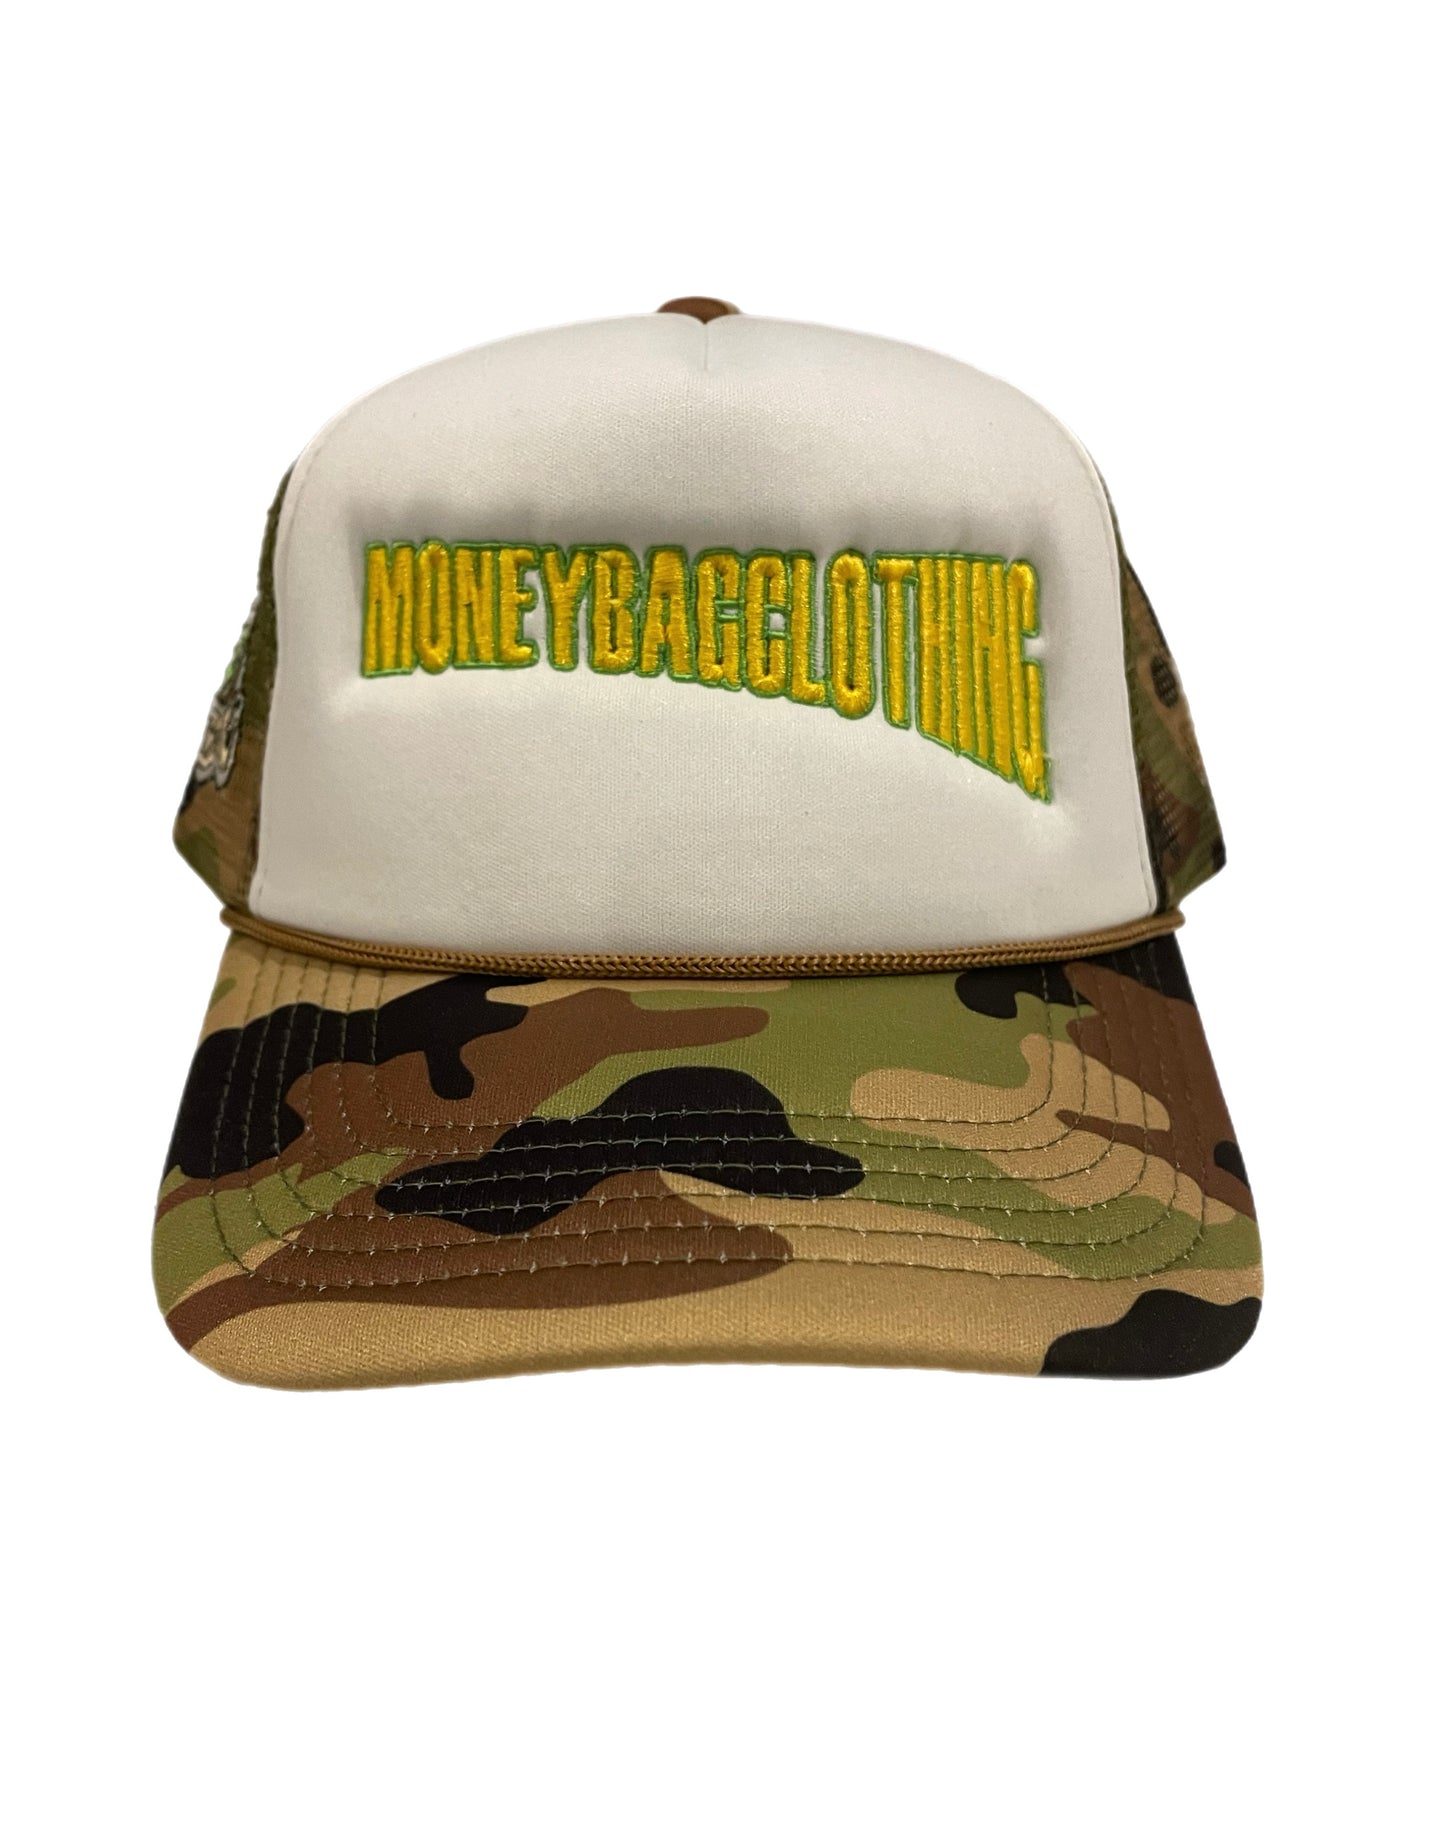 Money bag Camo Snap back trucker hat